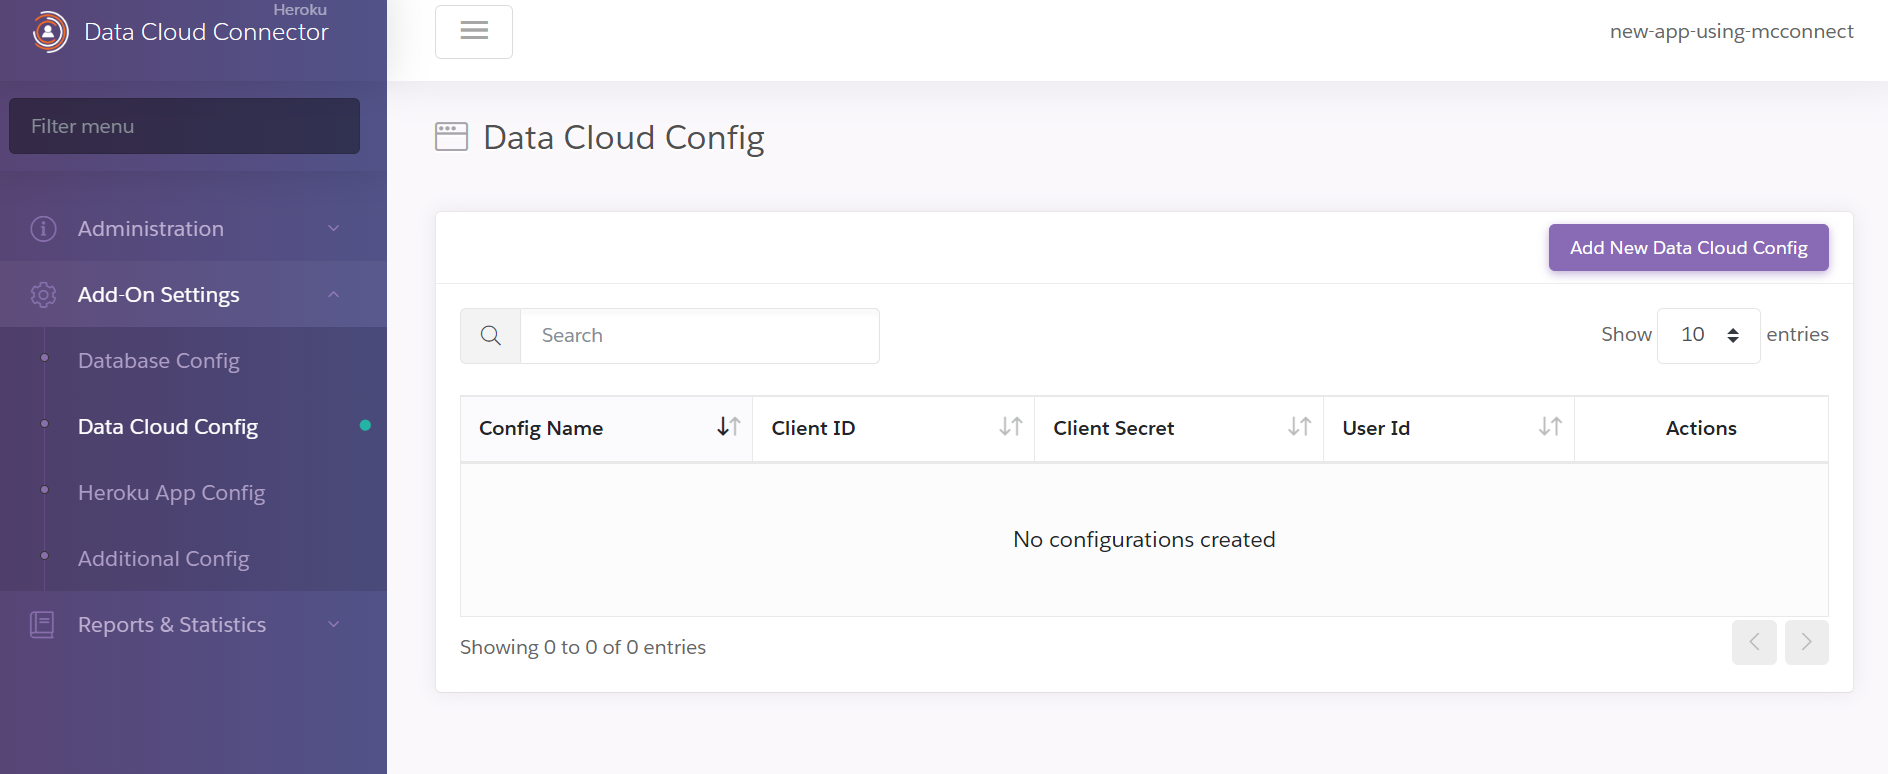 A screenshot when no Data Cloud configuration is created.